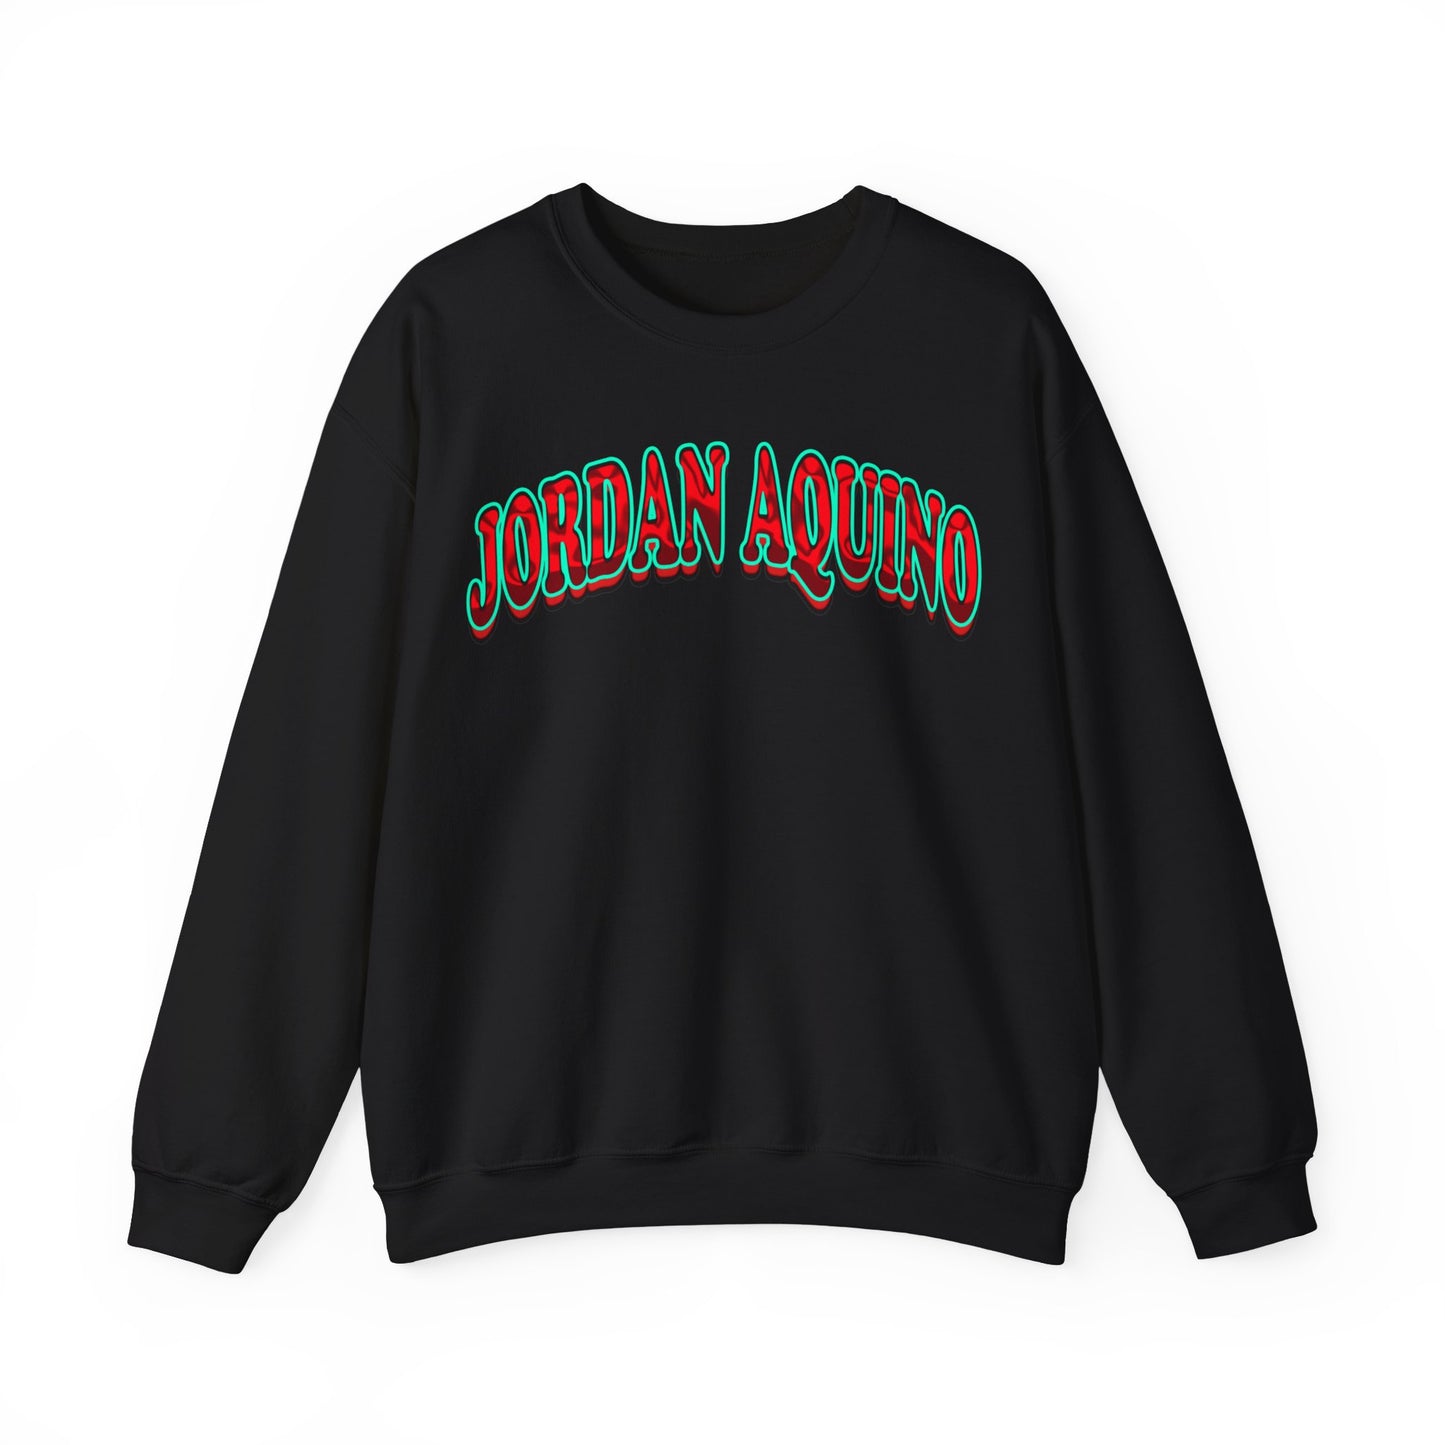 Jordan Aquino Crewneck Sweatshirt